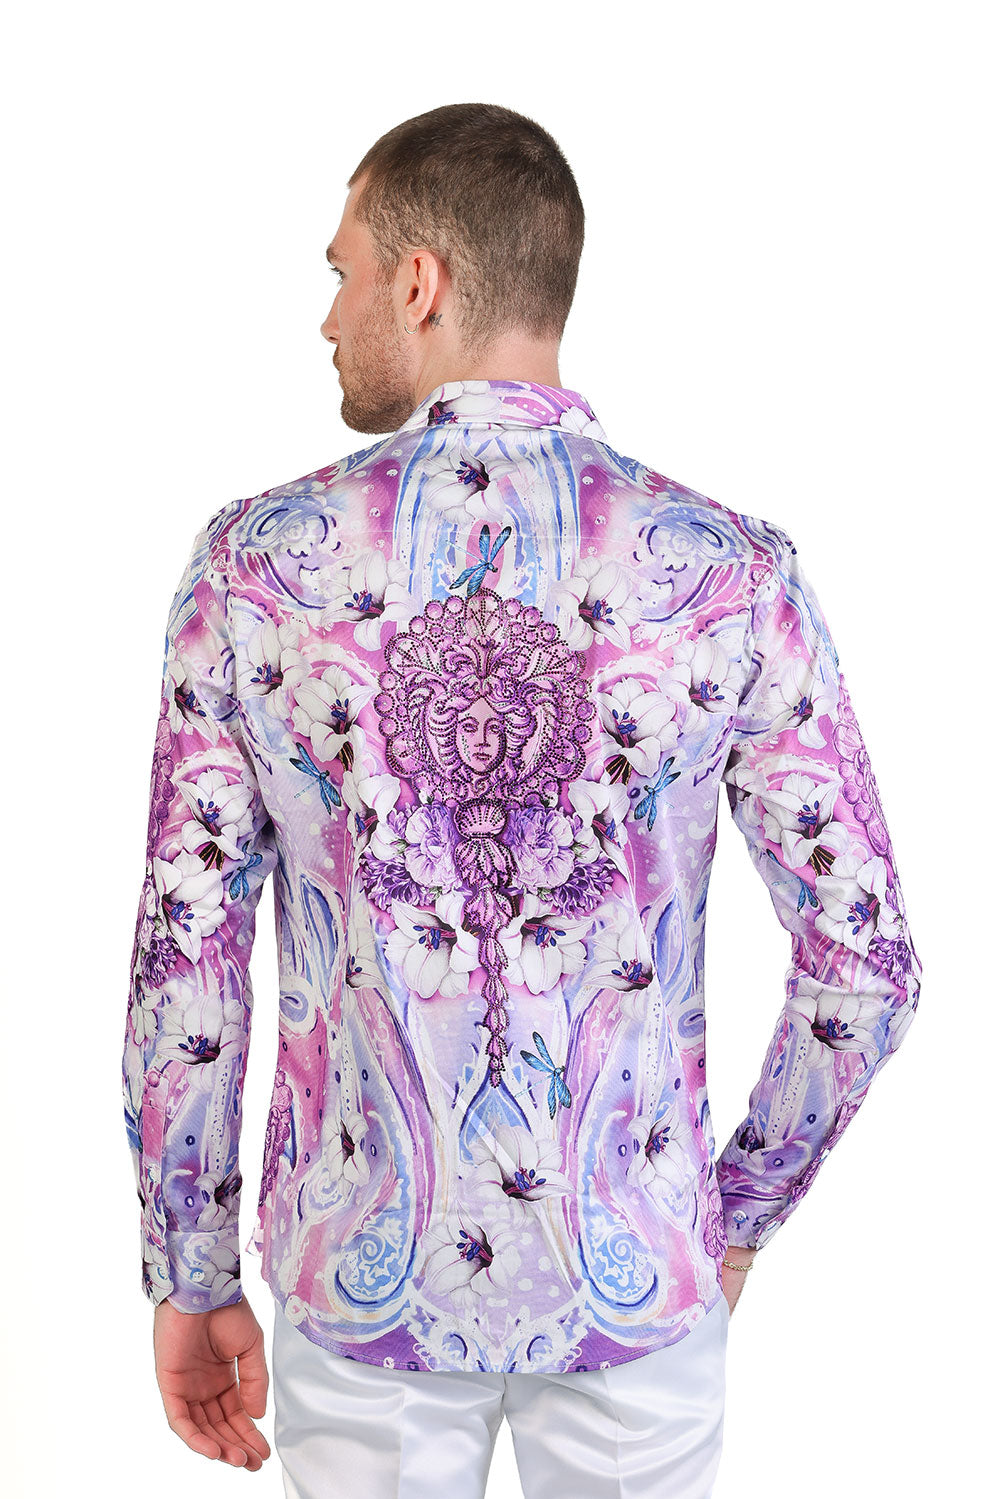 Barabas Men's Medusa Dragonfly Floral Baroque Button Down Shirt SPR19 Purple